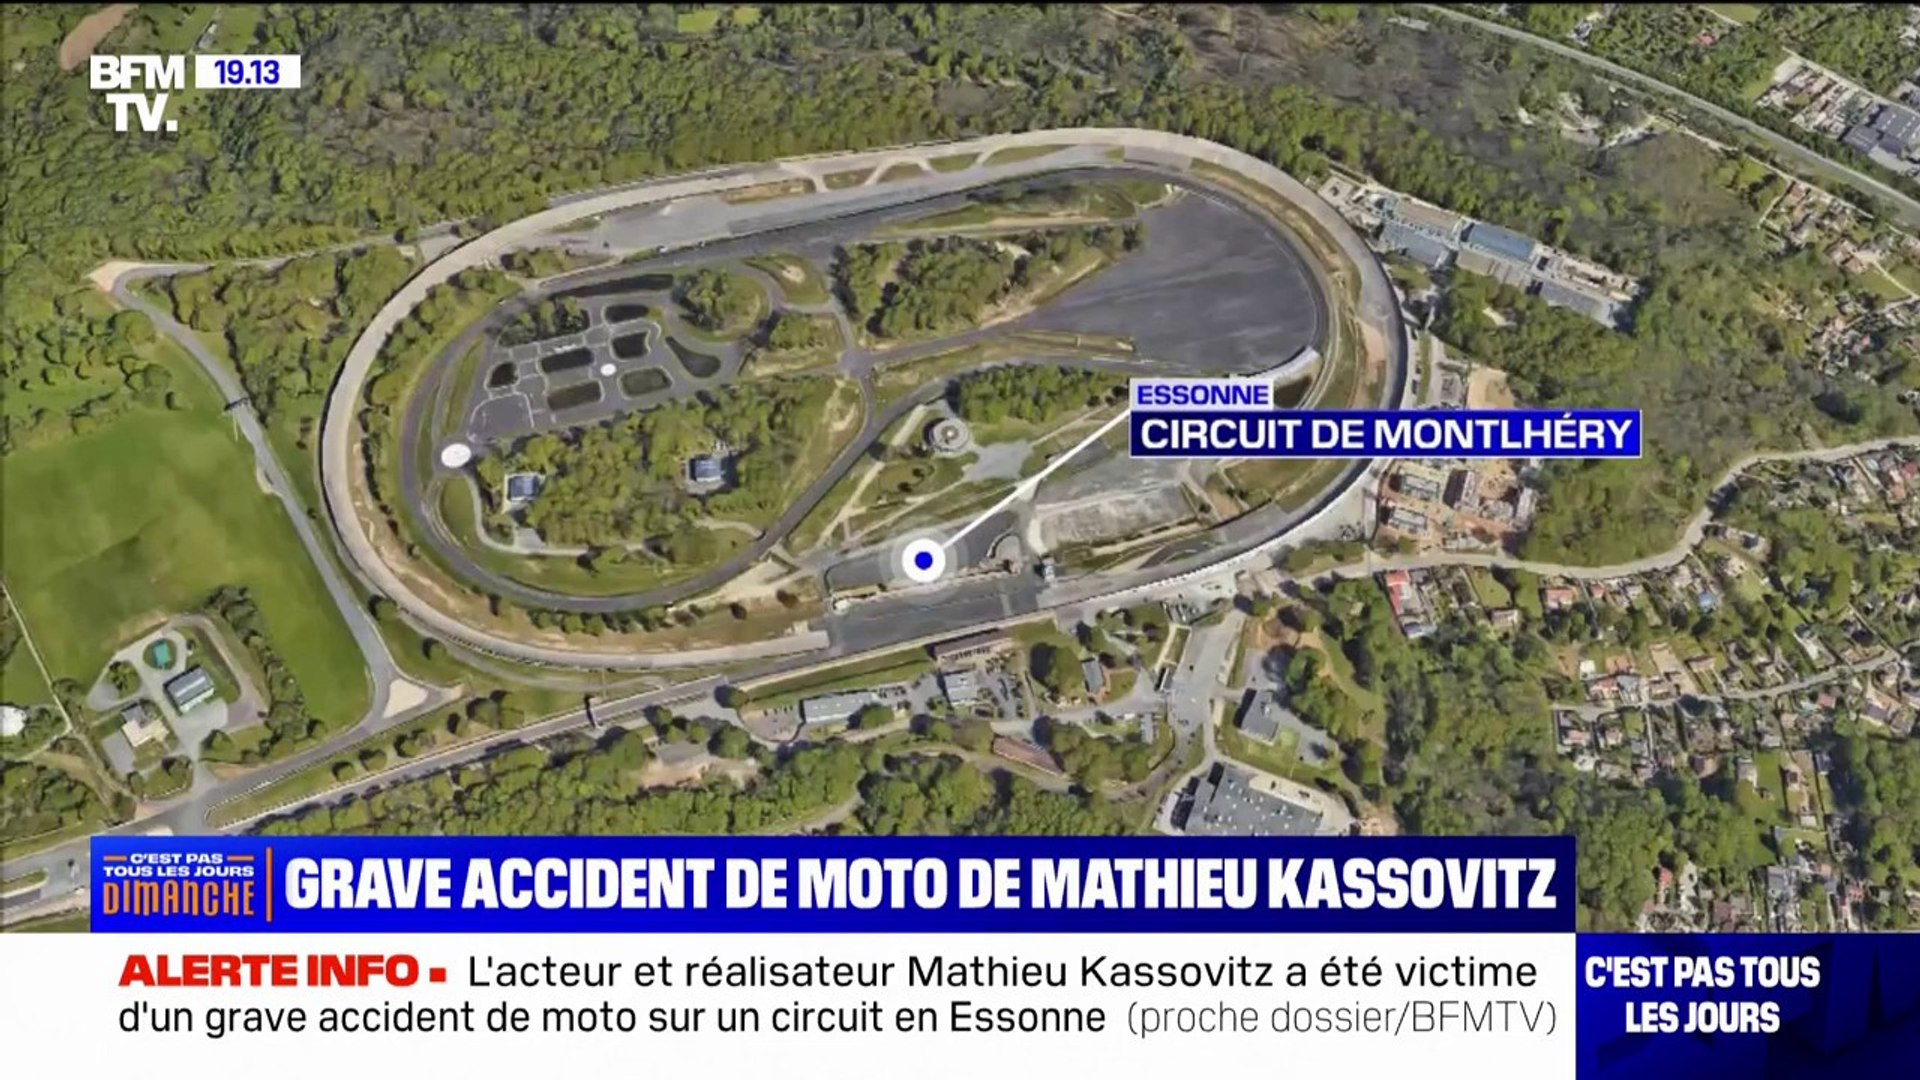 Mathieu Kassovitz Accident and Health Update, Mathieu Kassovitz